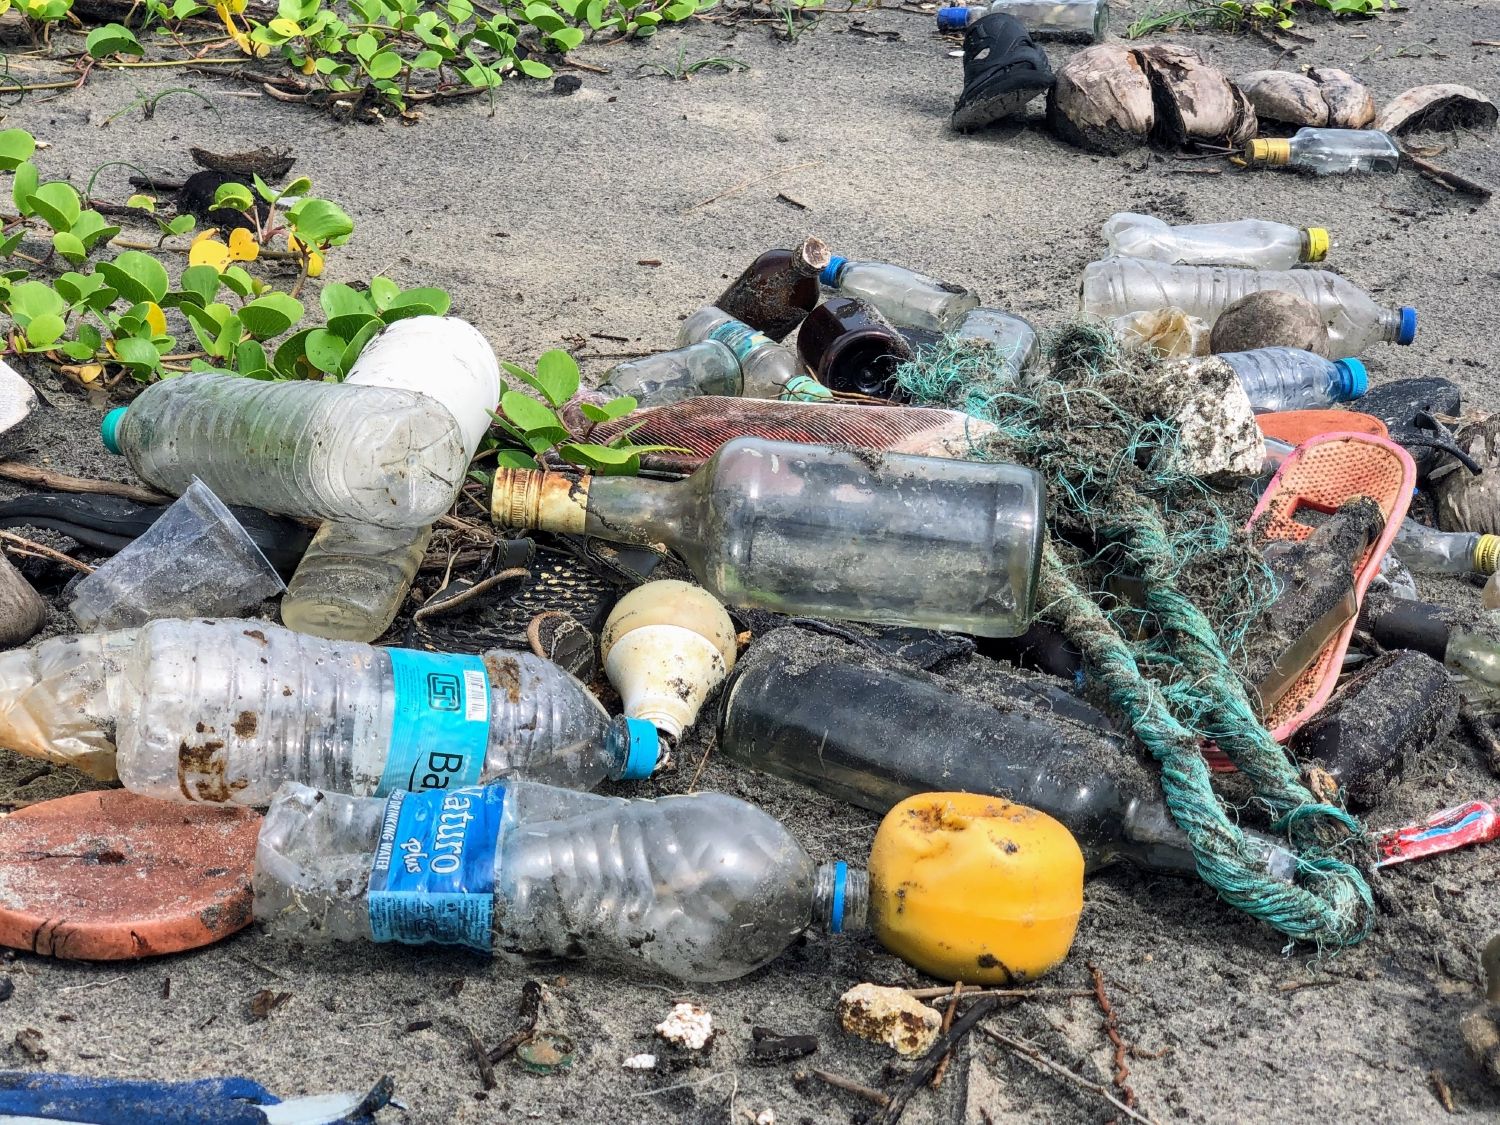 Plastic waste on the beach